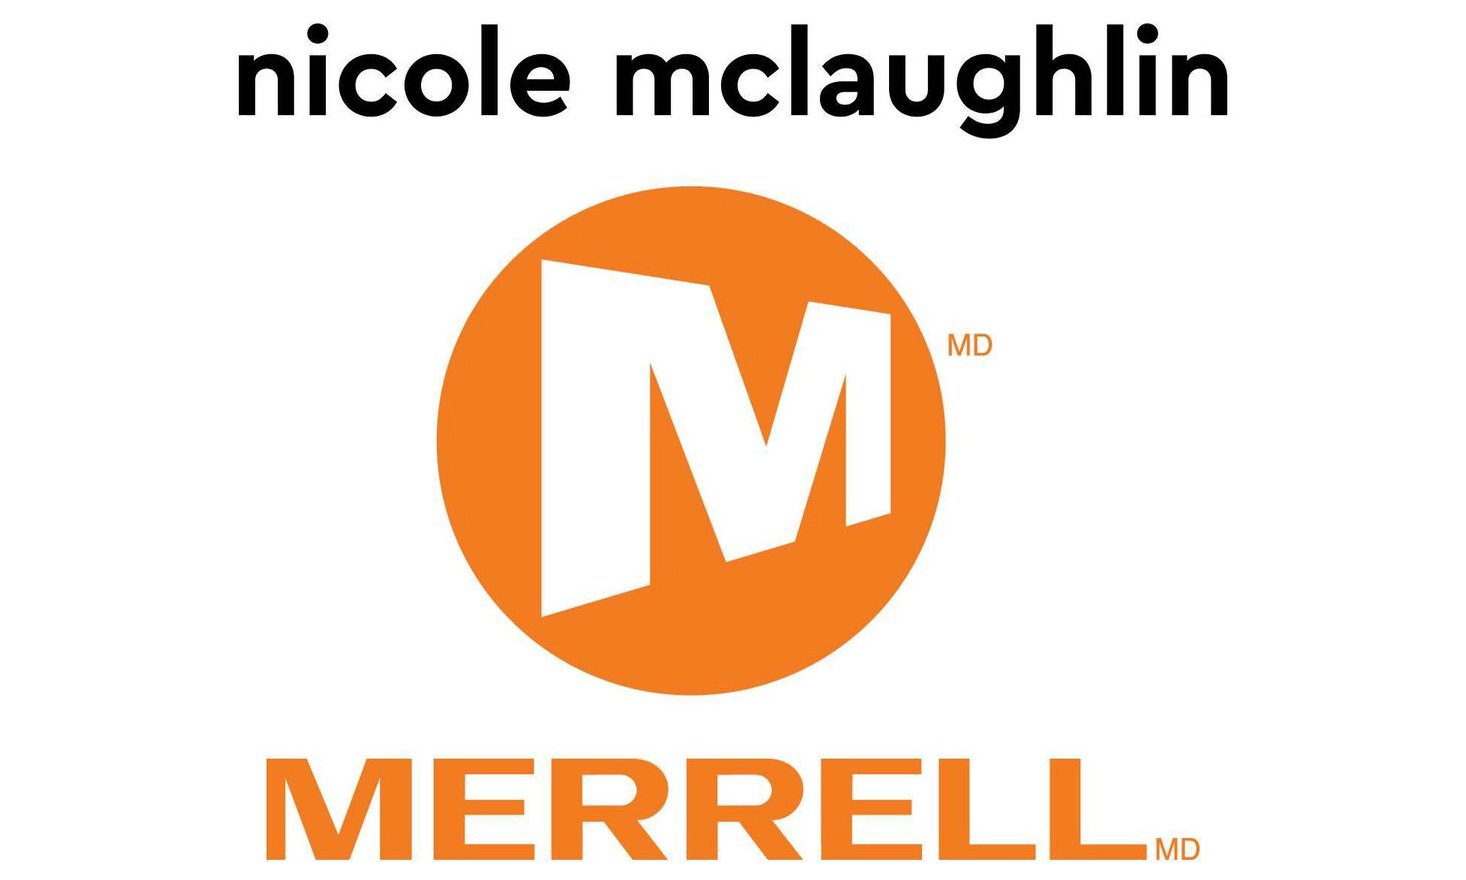 Nicole Mclaughlin x MERRELL 全新合作鞋款率先赏析